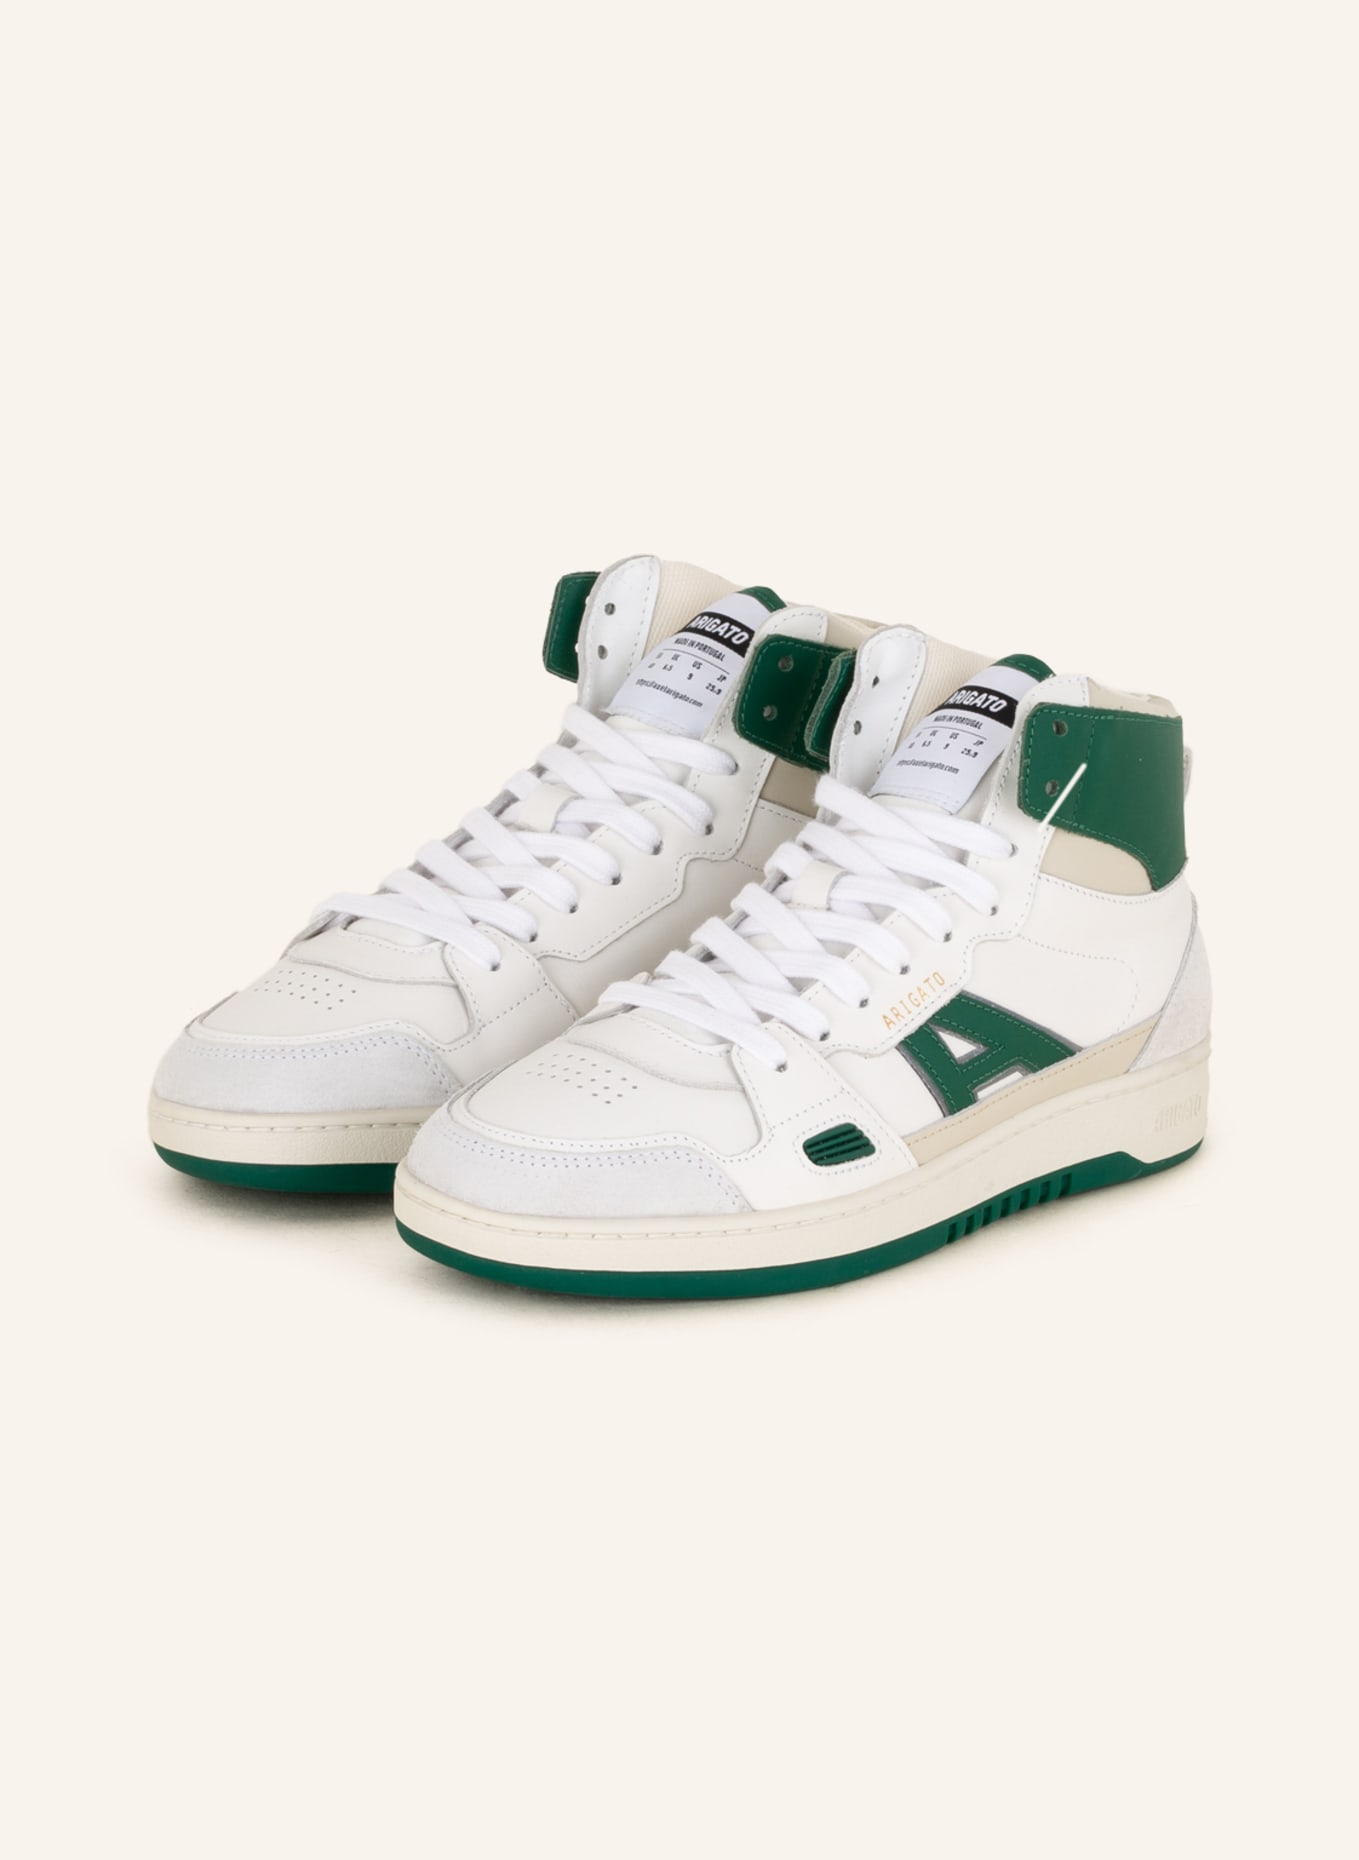 AXEL ARIGATO Hightop-Sneaker A DICE, Farbe: WEISS/ GRÜN (Bild 1)